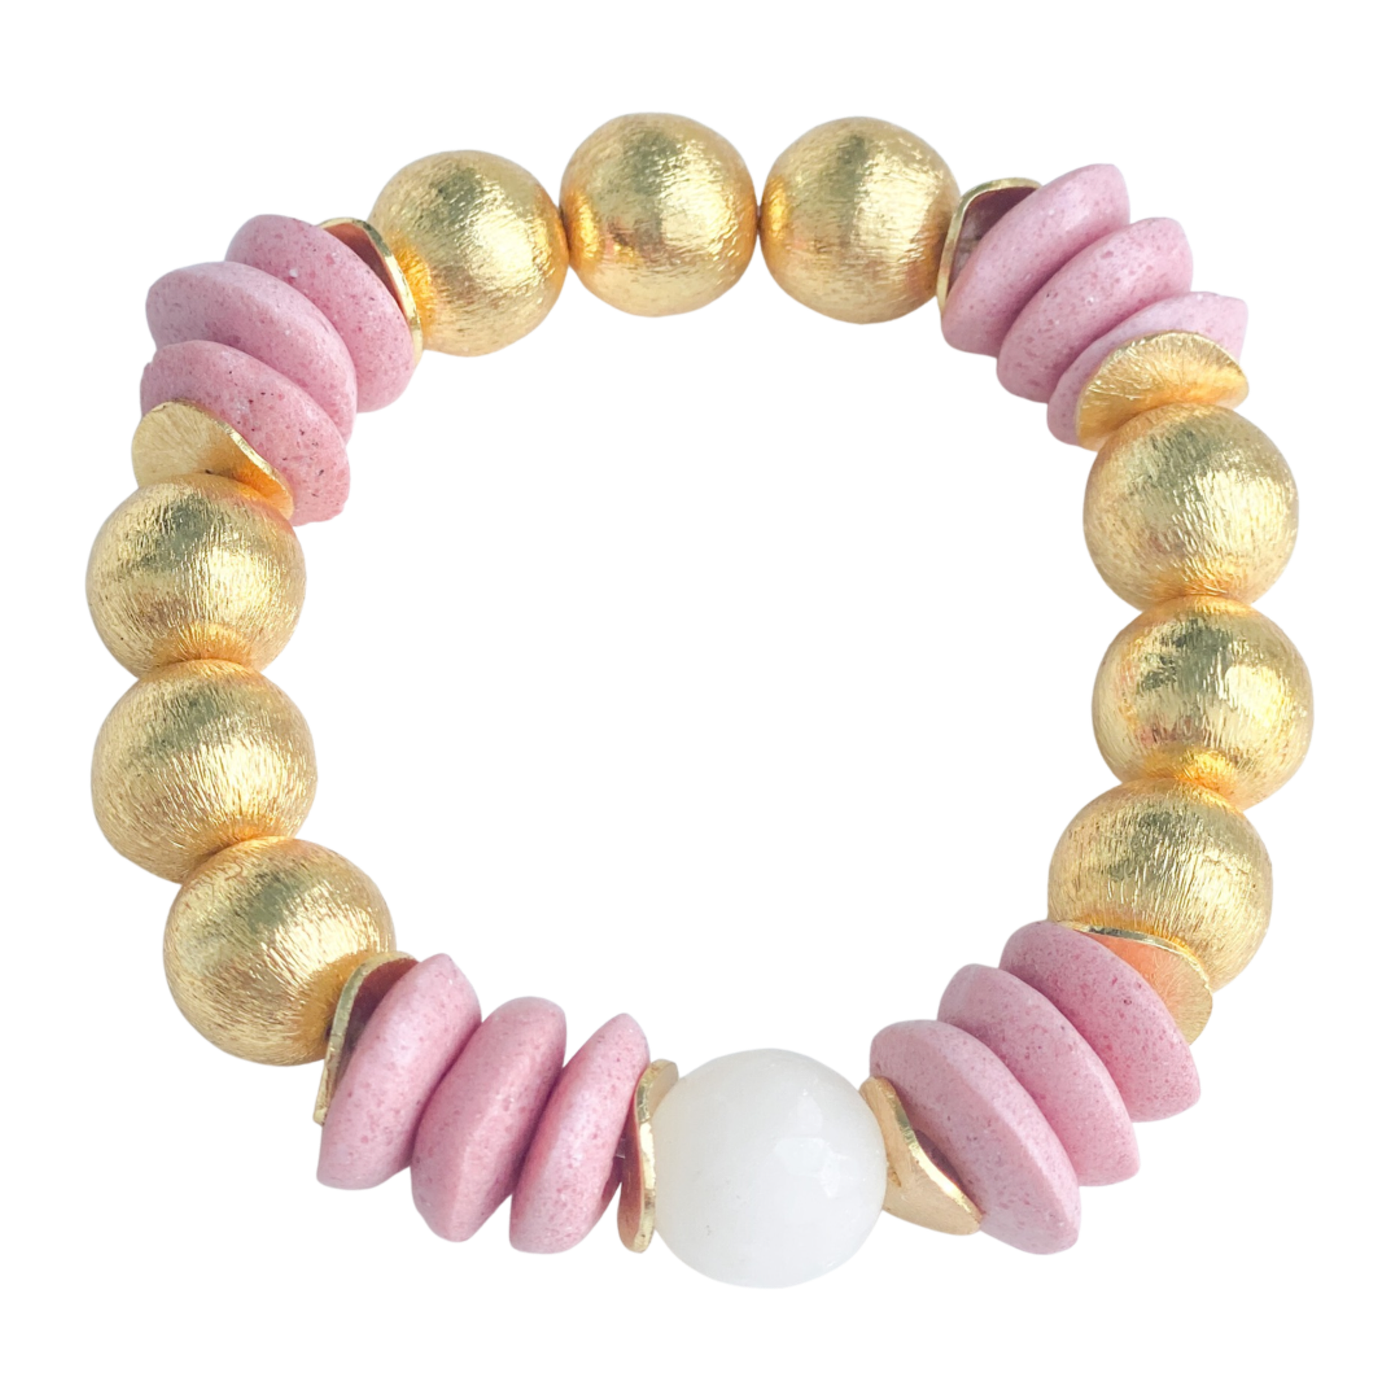 Candace Small Bracelet - Pretty Pink Stones